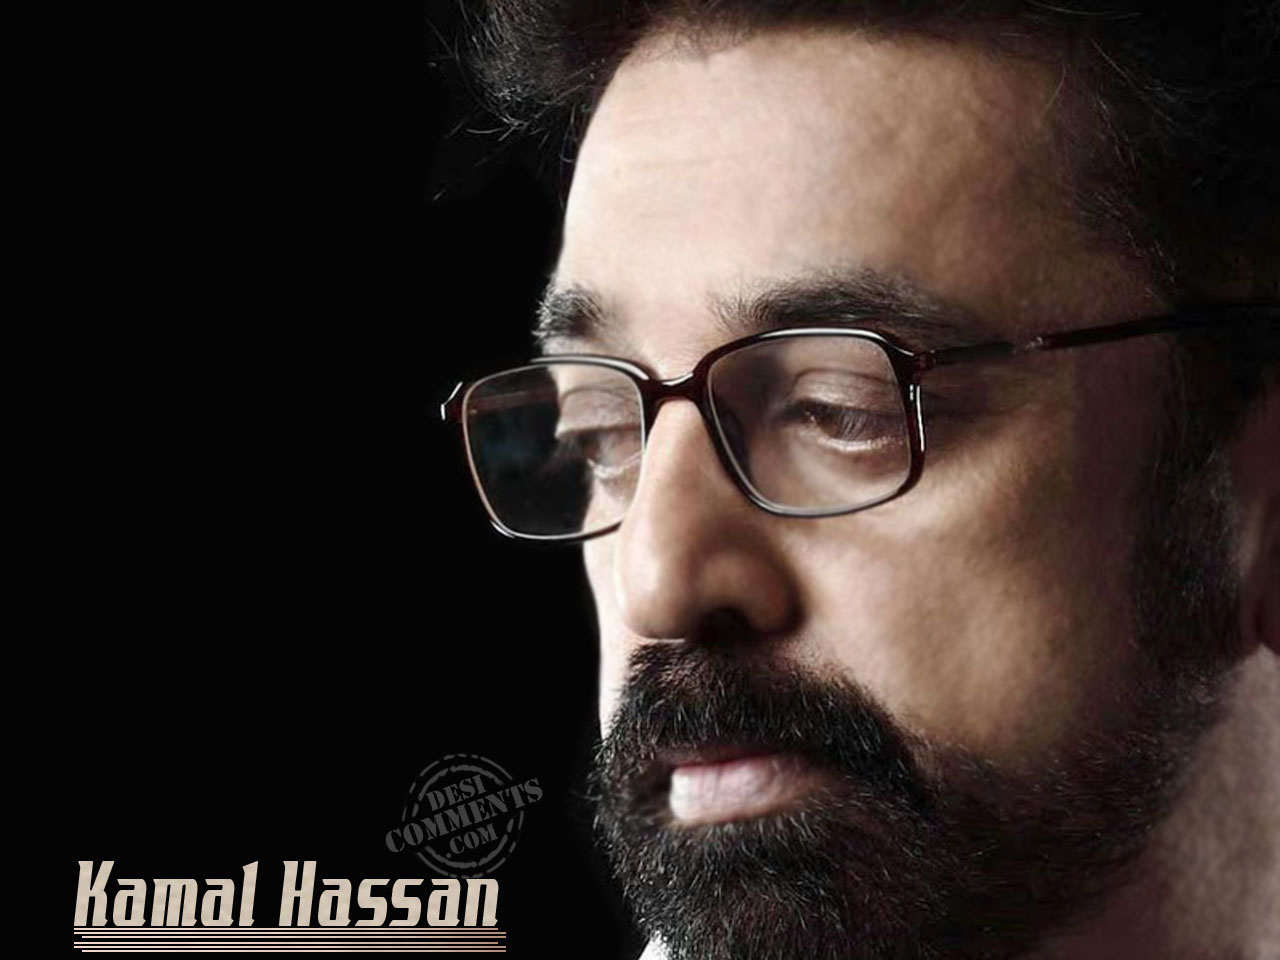 kamal hassan wallpaper,occhiali,barba,bicchieri,fronte,baffi